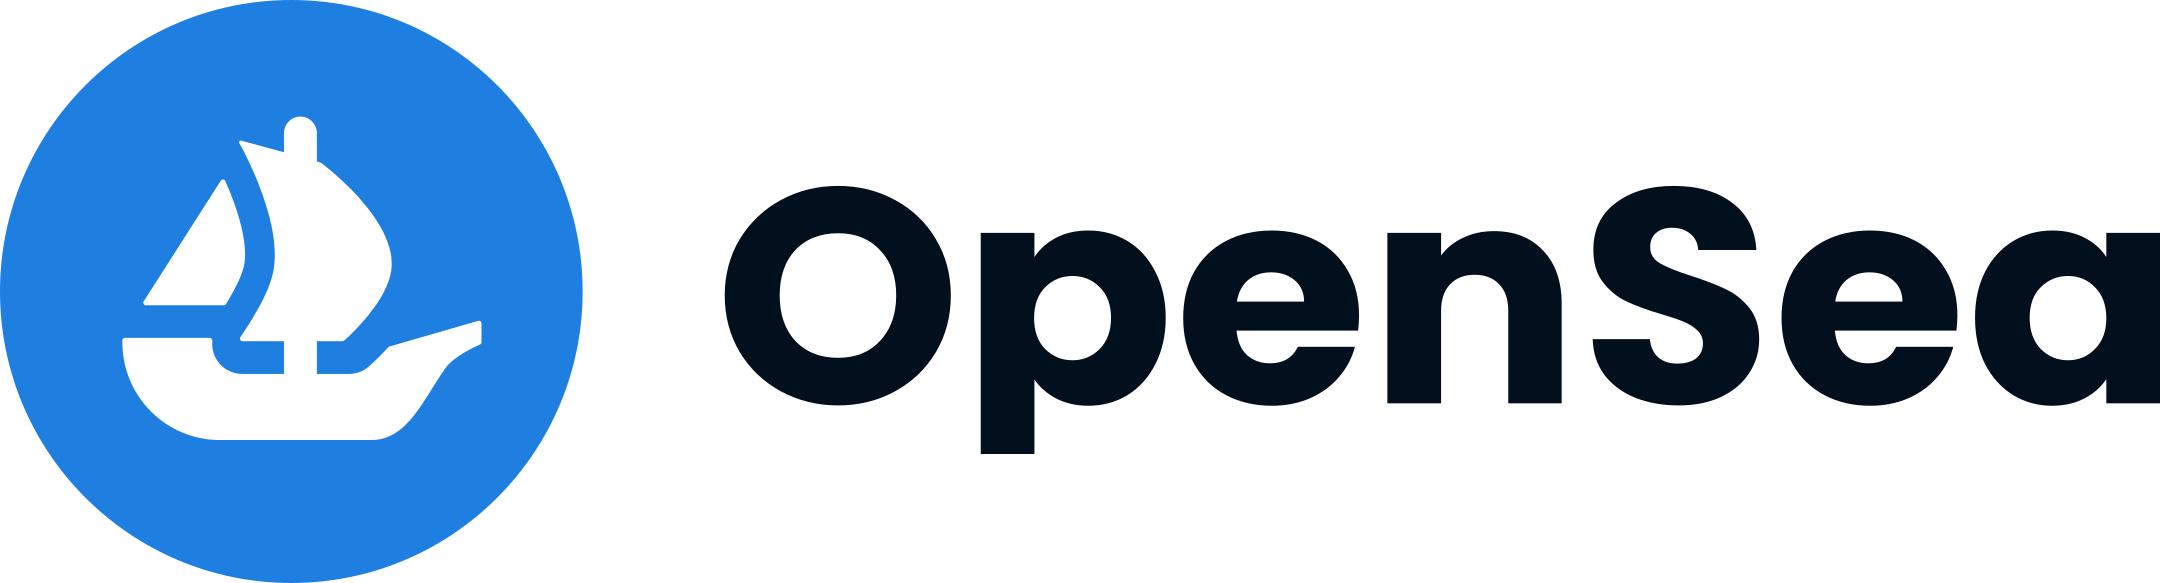 opensea logo 1 - OpenSea Logo